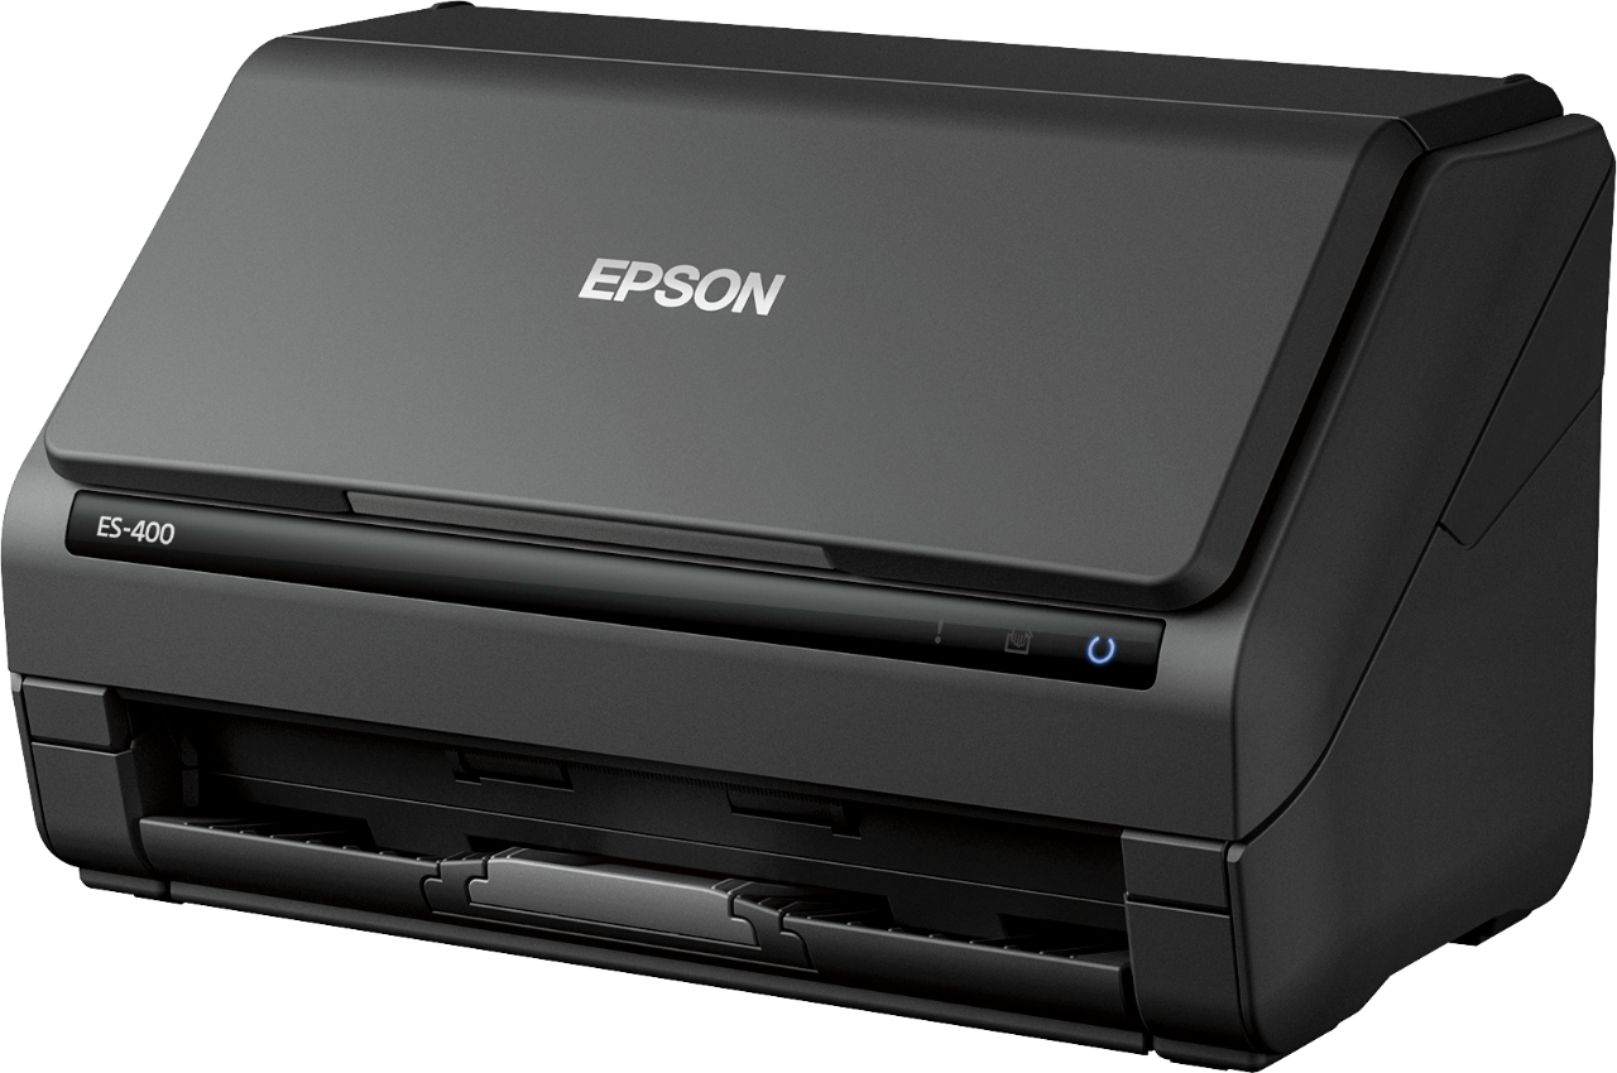 Epson Es 400 Windows 10 Driver